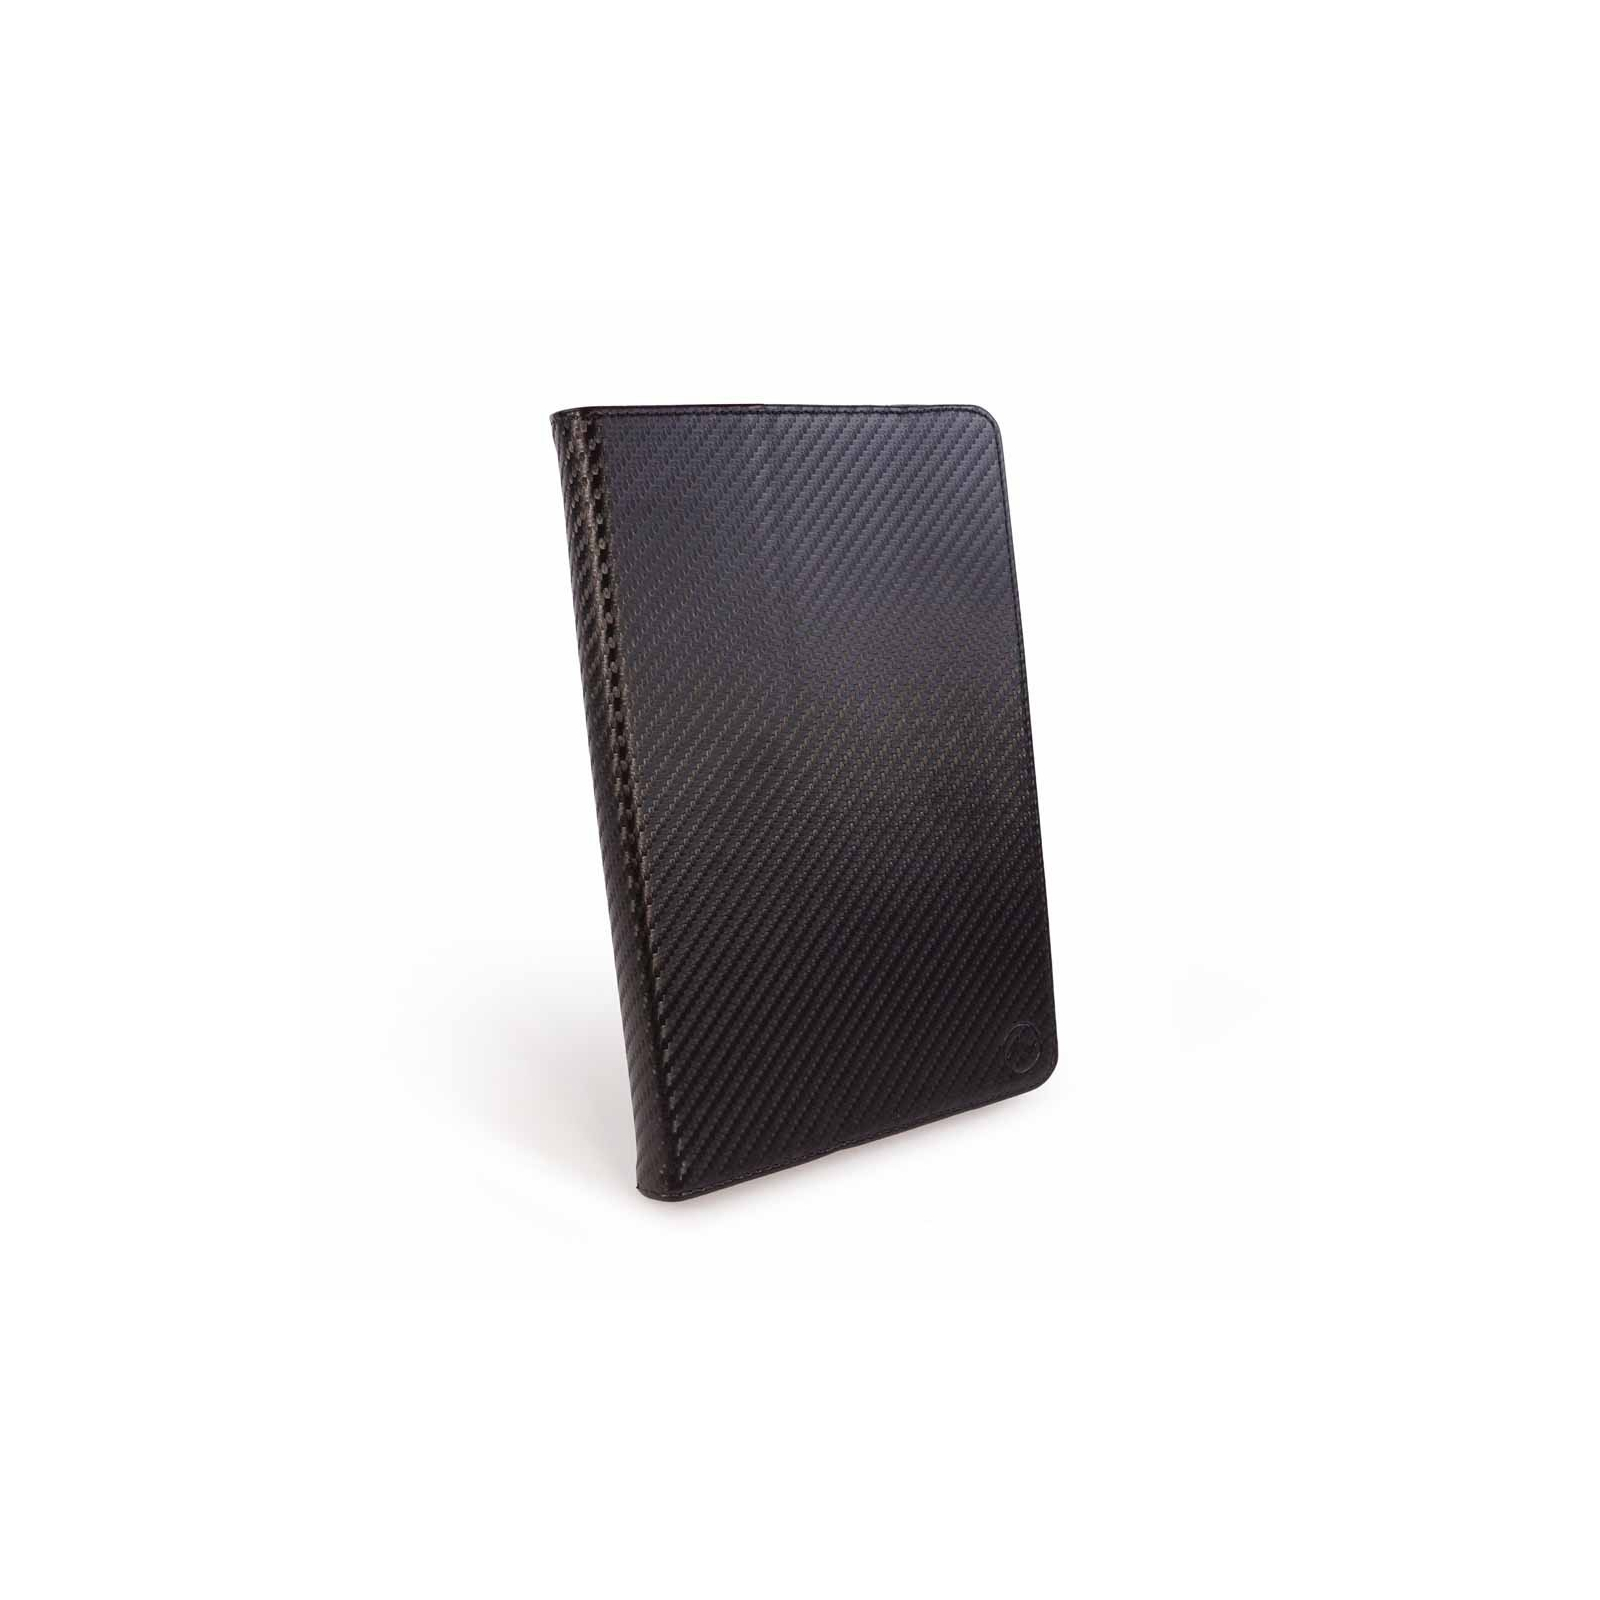 Чехол для планшета Tuff-Luv 7 Uni-View Black Carbon (A3_41) изображение 4